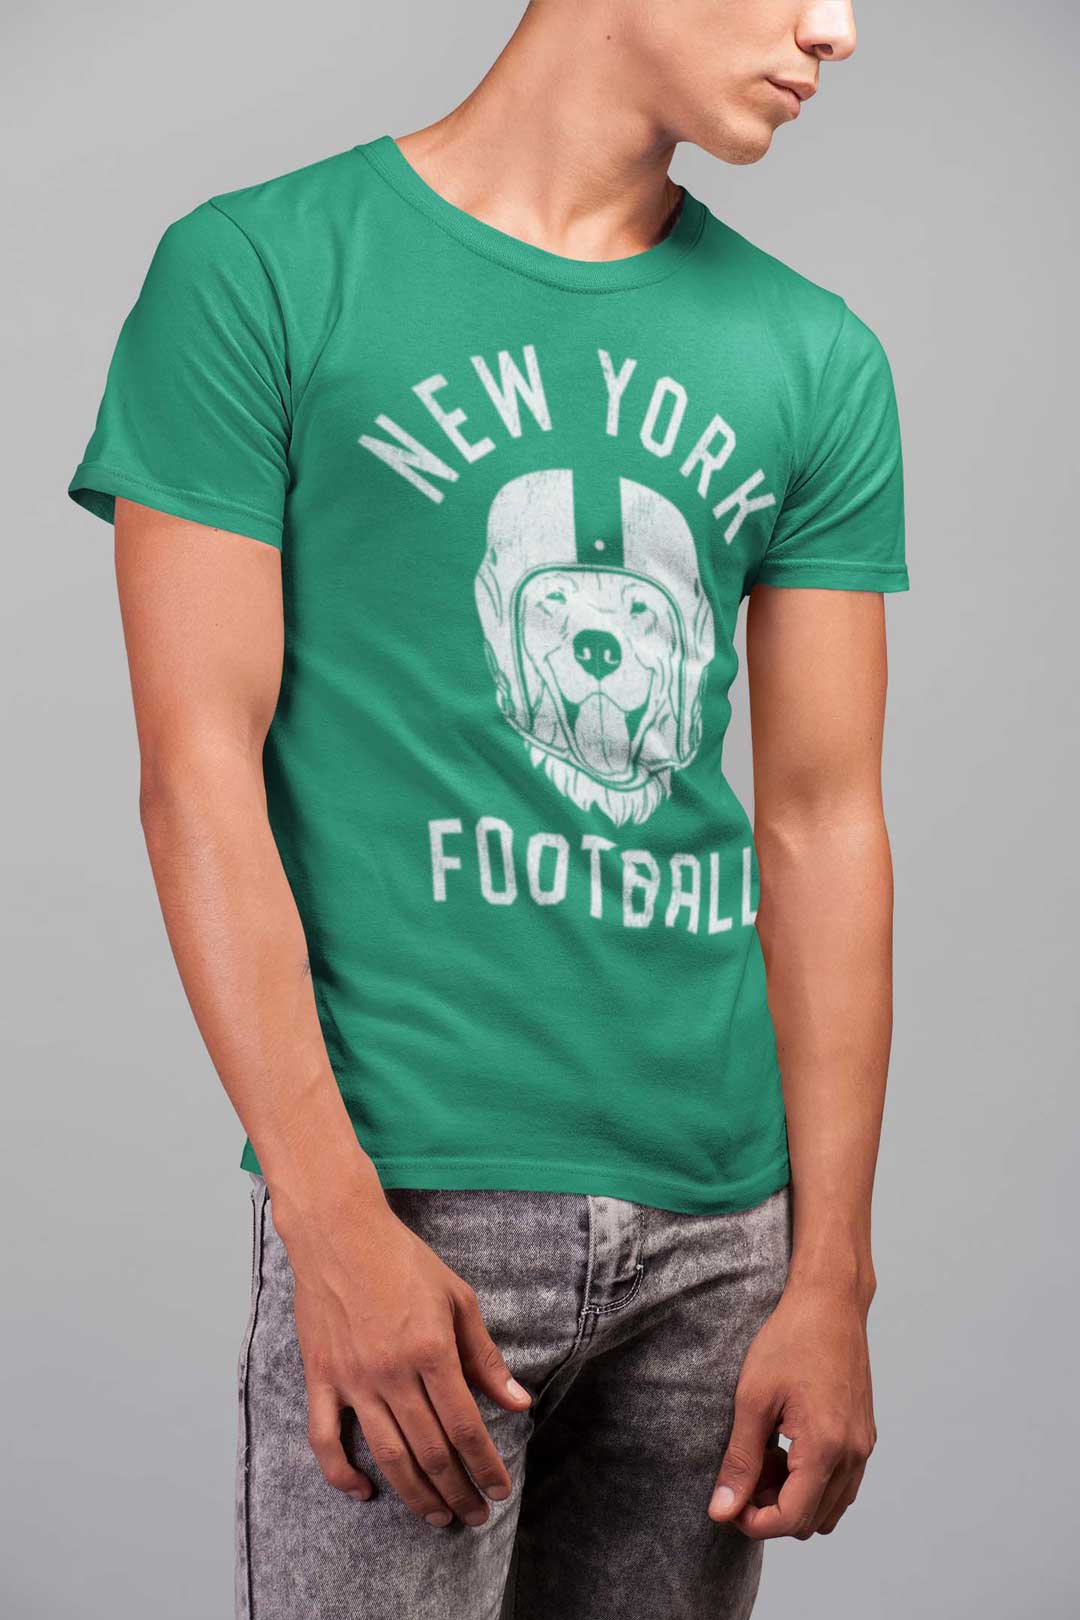 New York Giants Dog T-Shirt